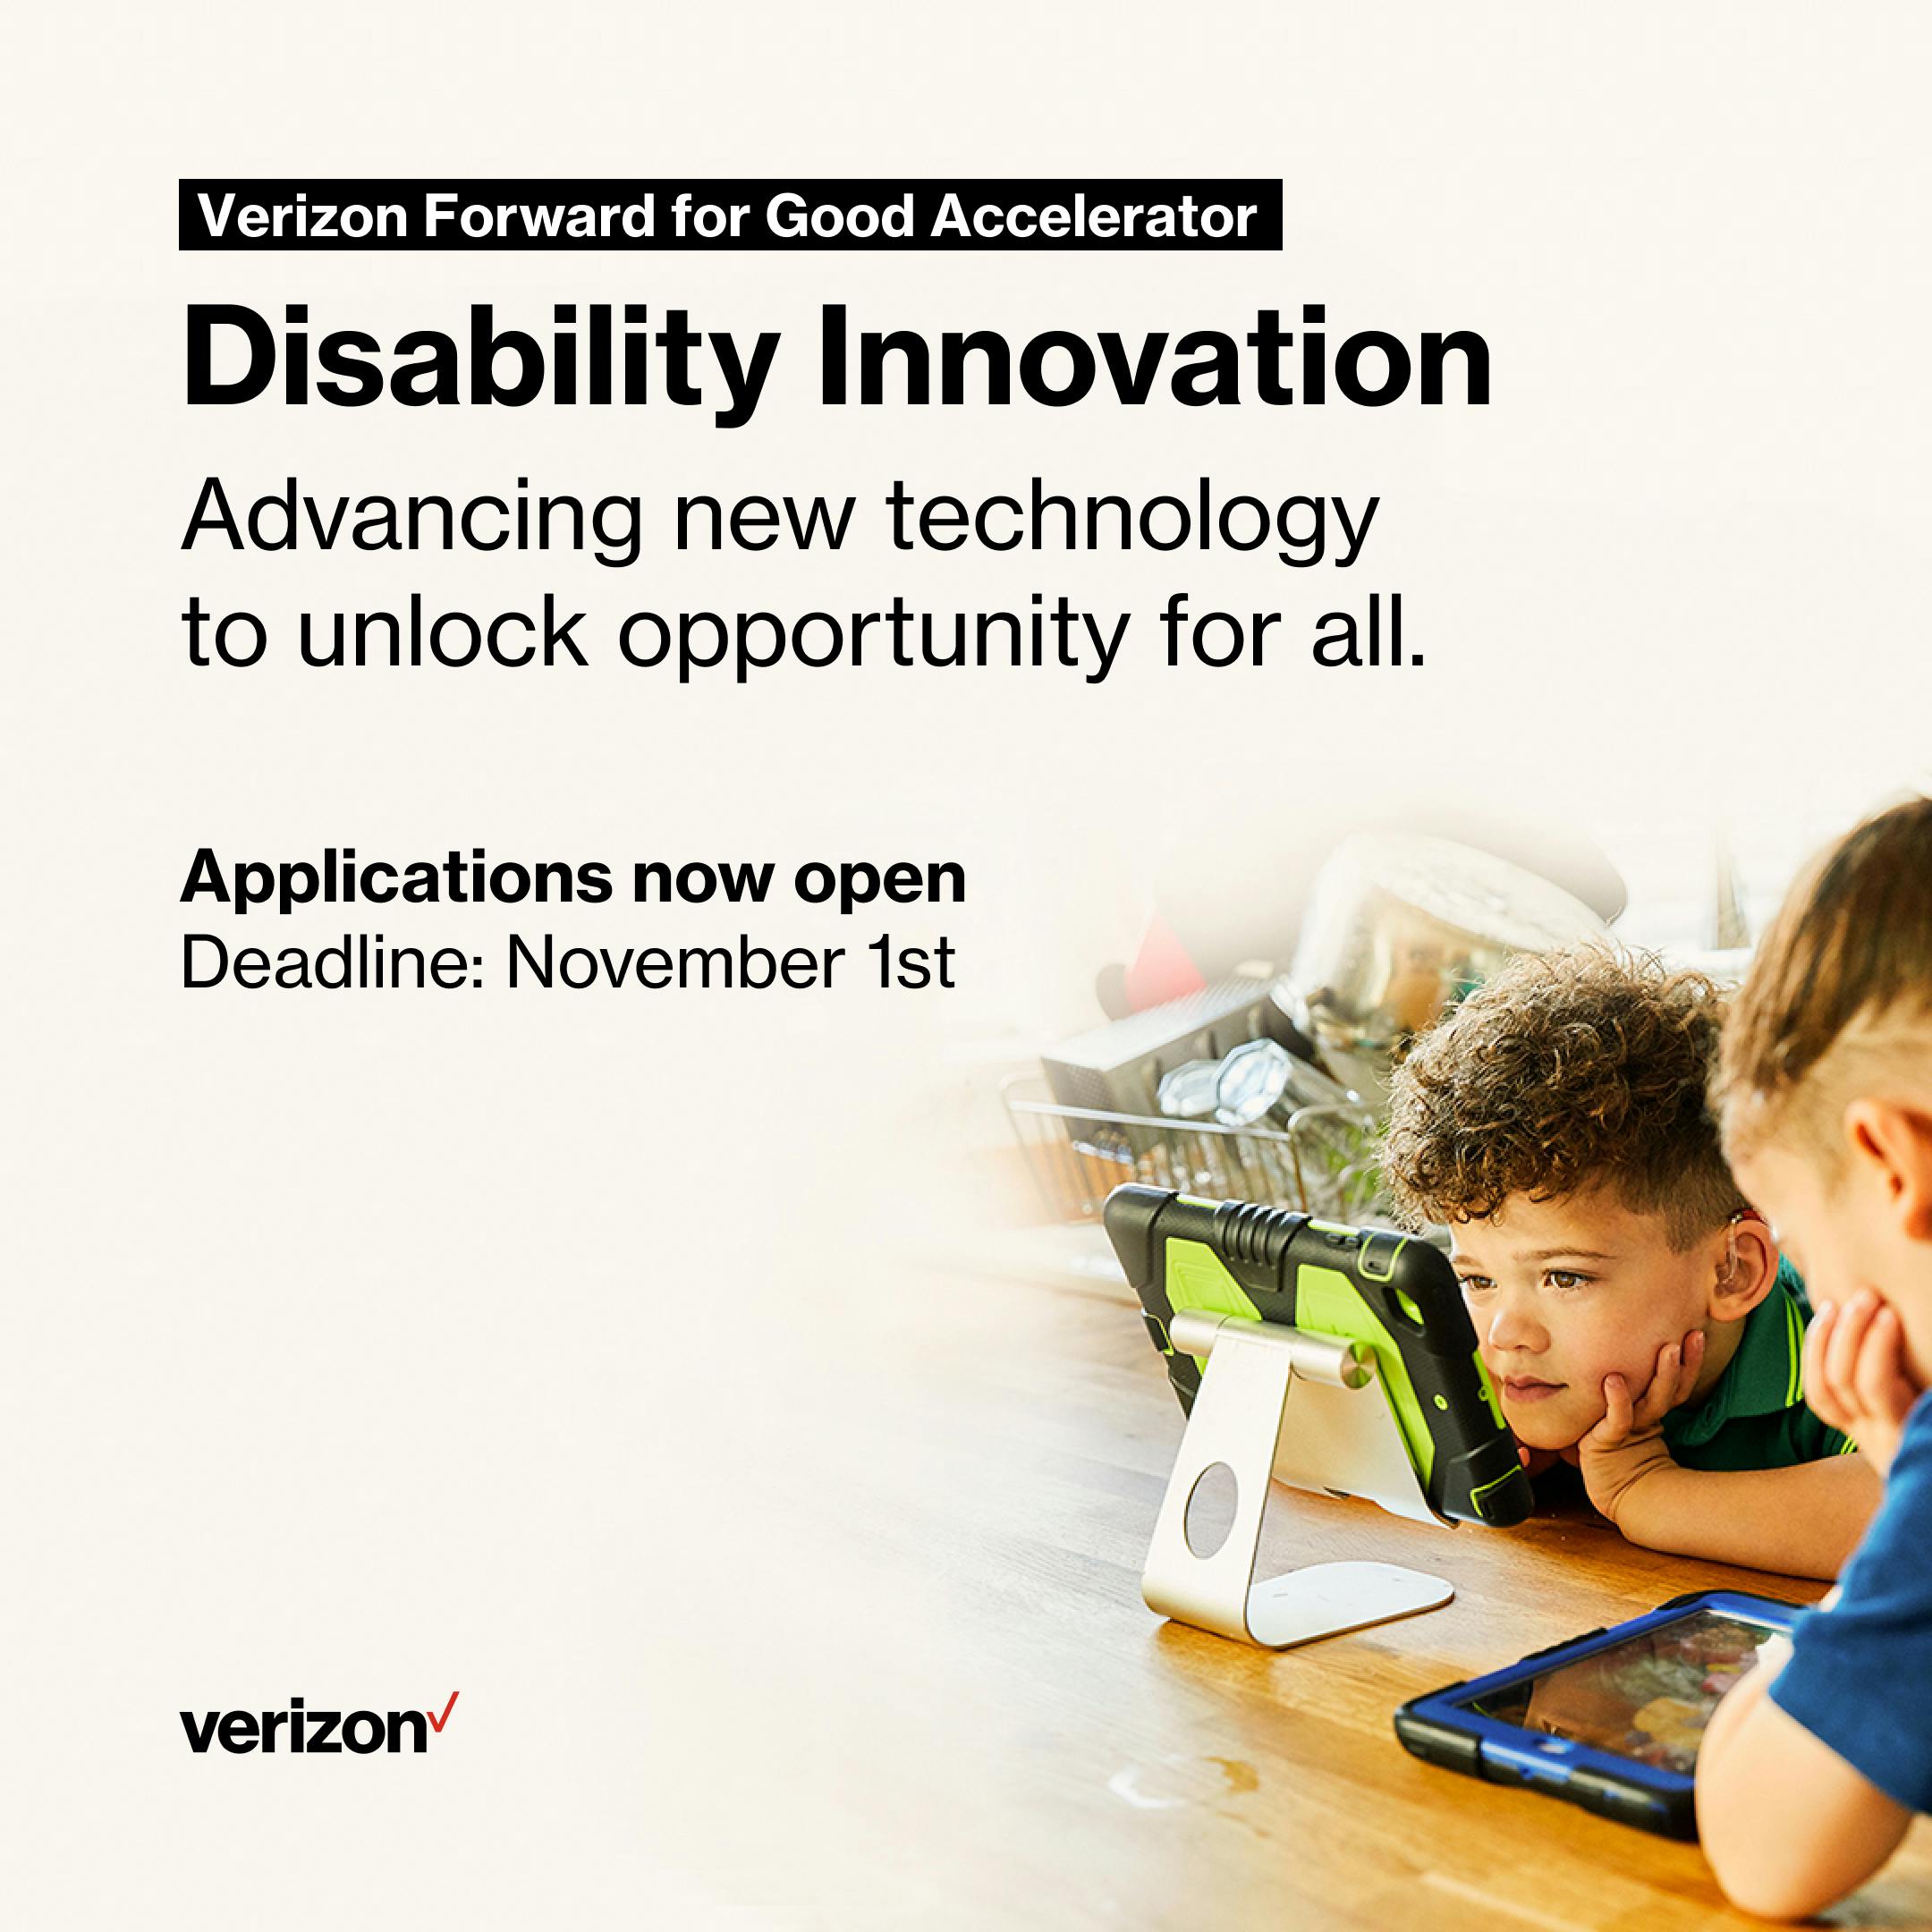 Verizon Forward for Good Accelerator Disability Innovation flyer.